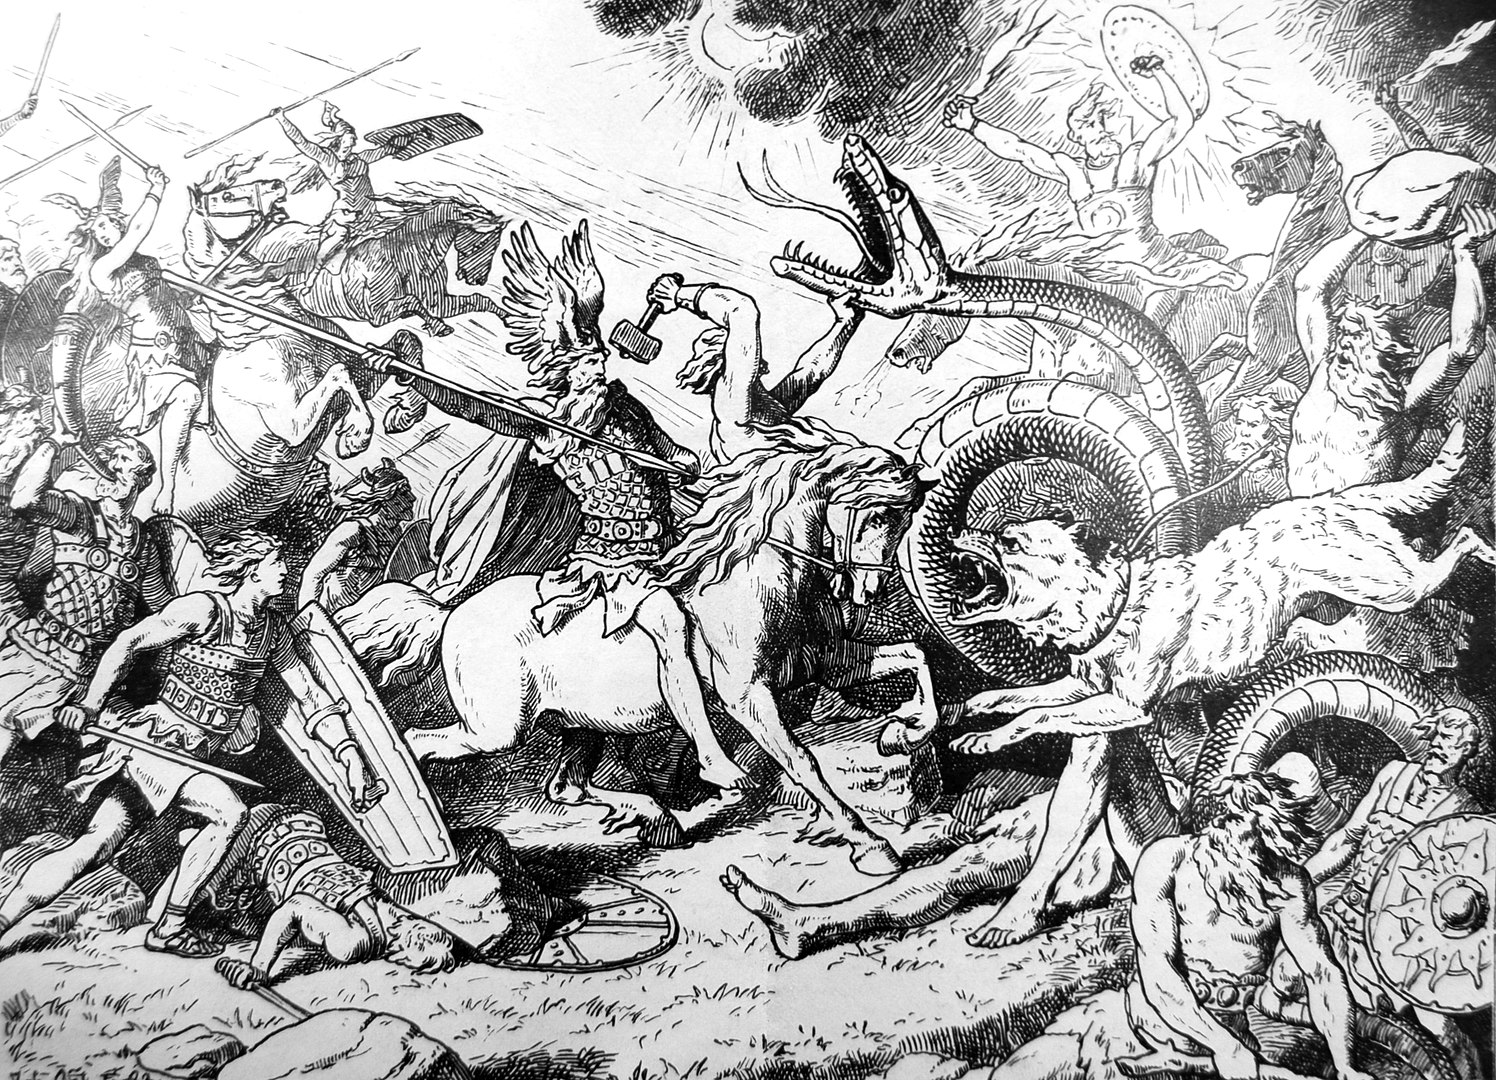 Warriors on horseback battling serpents and beasts